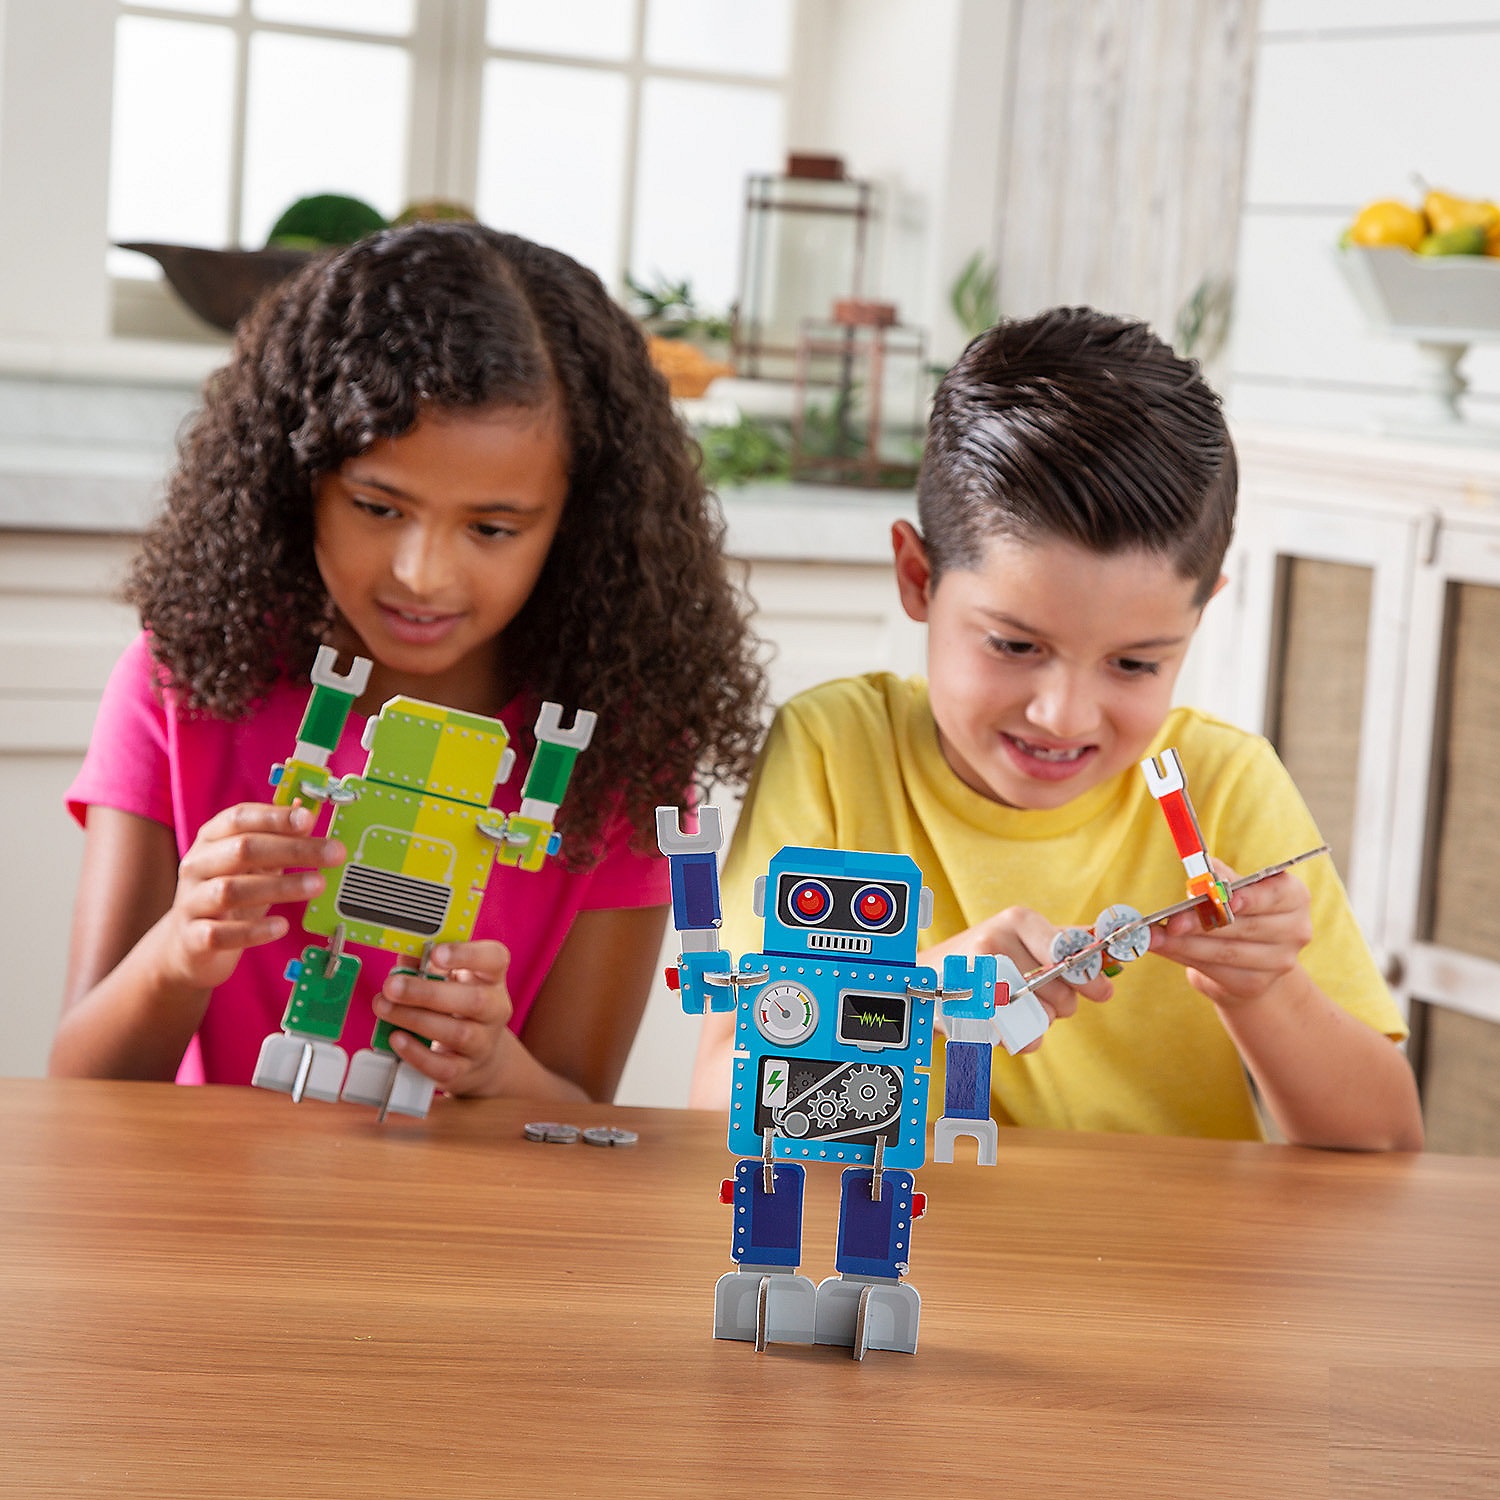 buildable-robots-toy-set-makes-3_14113630-a02